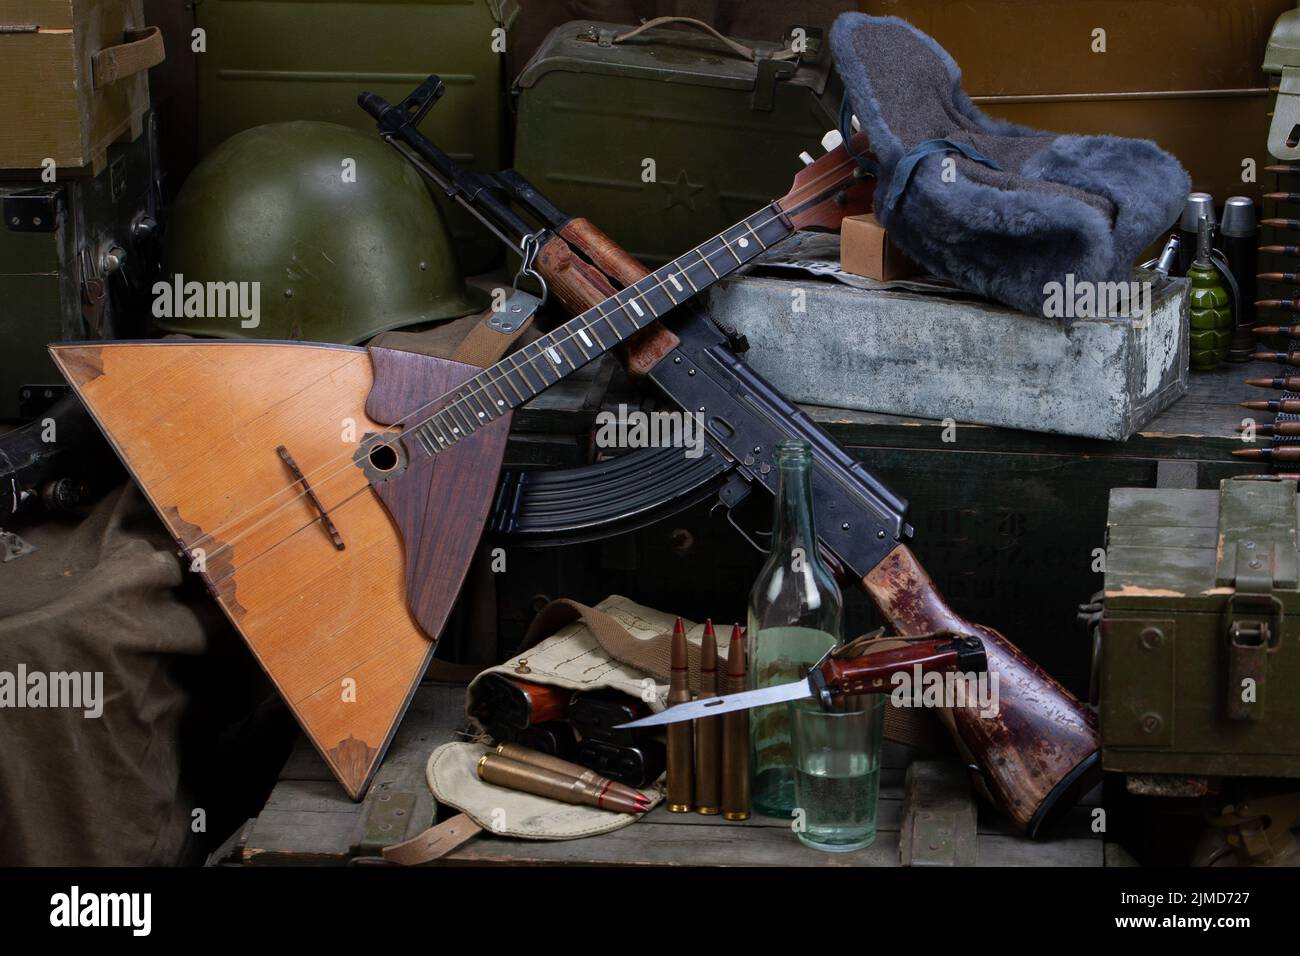 Russian army - kalashnikov AK 47 and balalaika with ammunition on army green crates background. Stock Photo